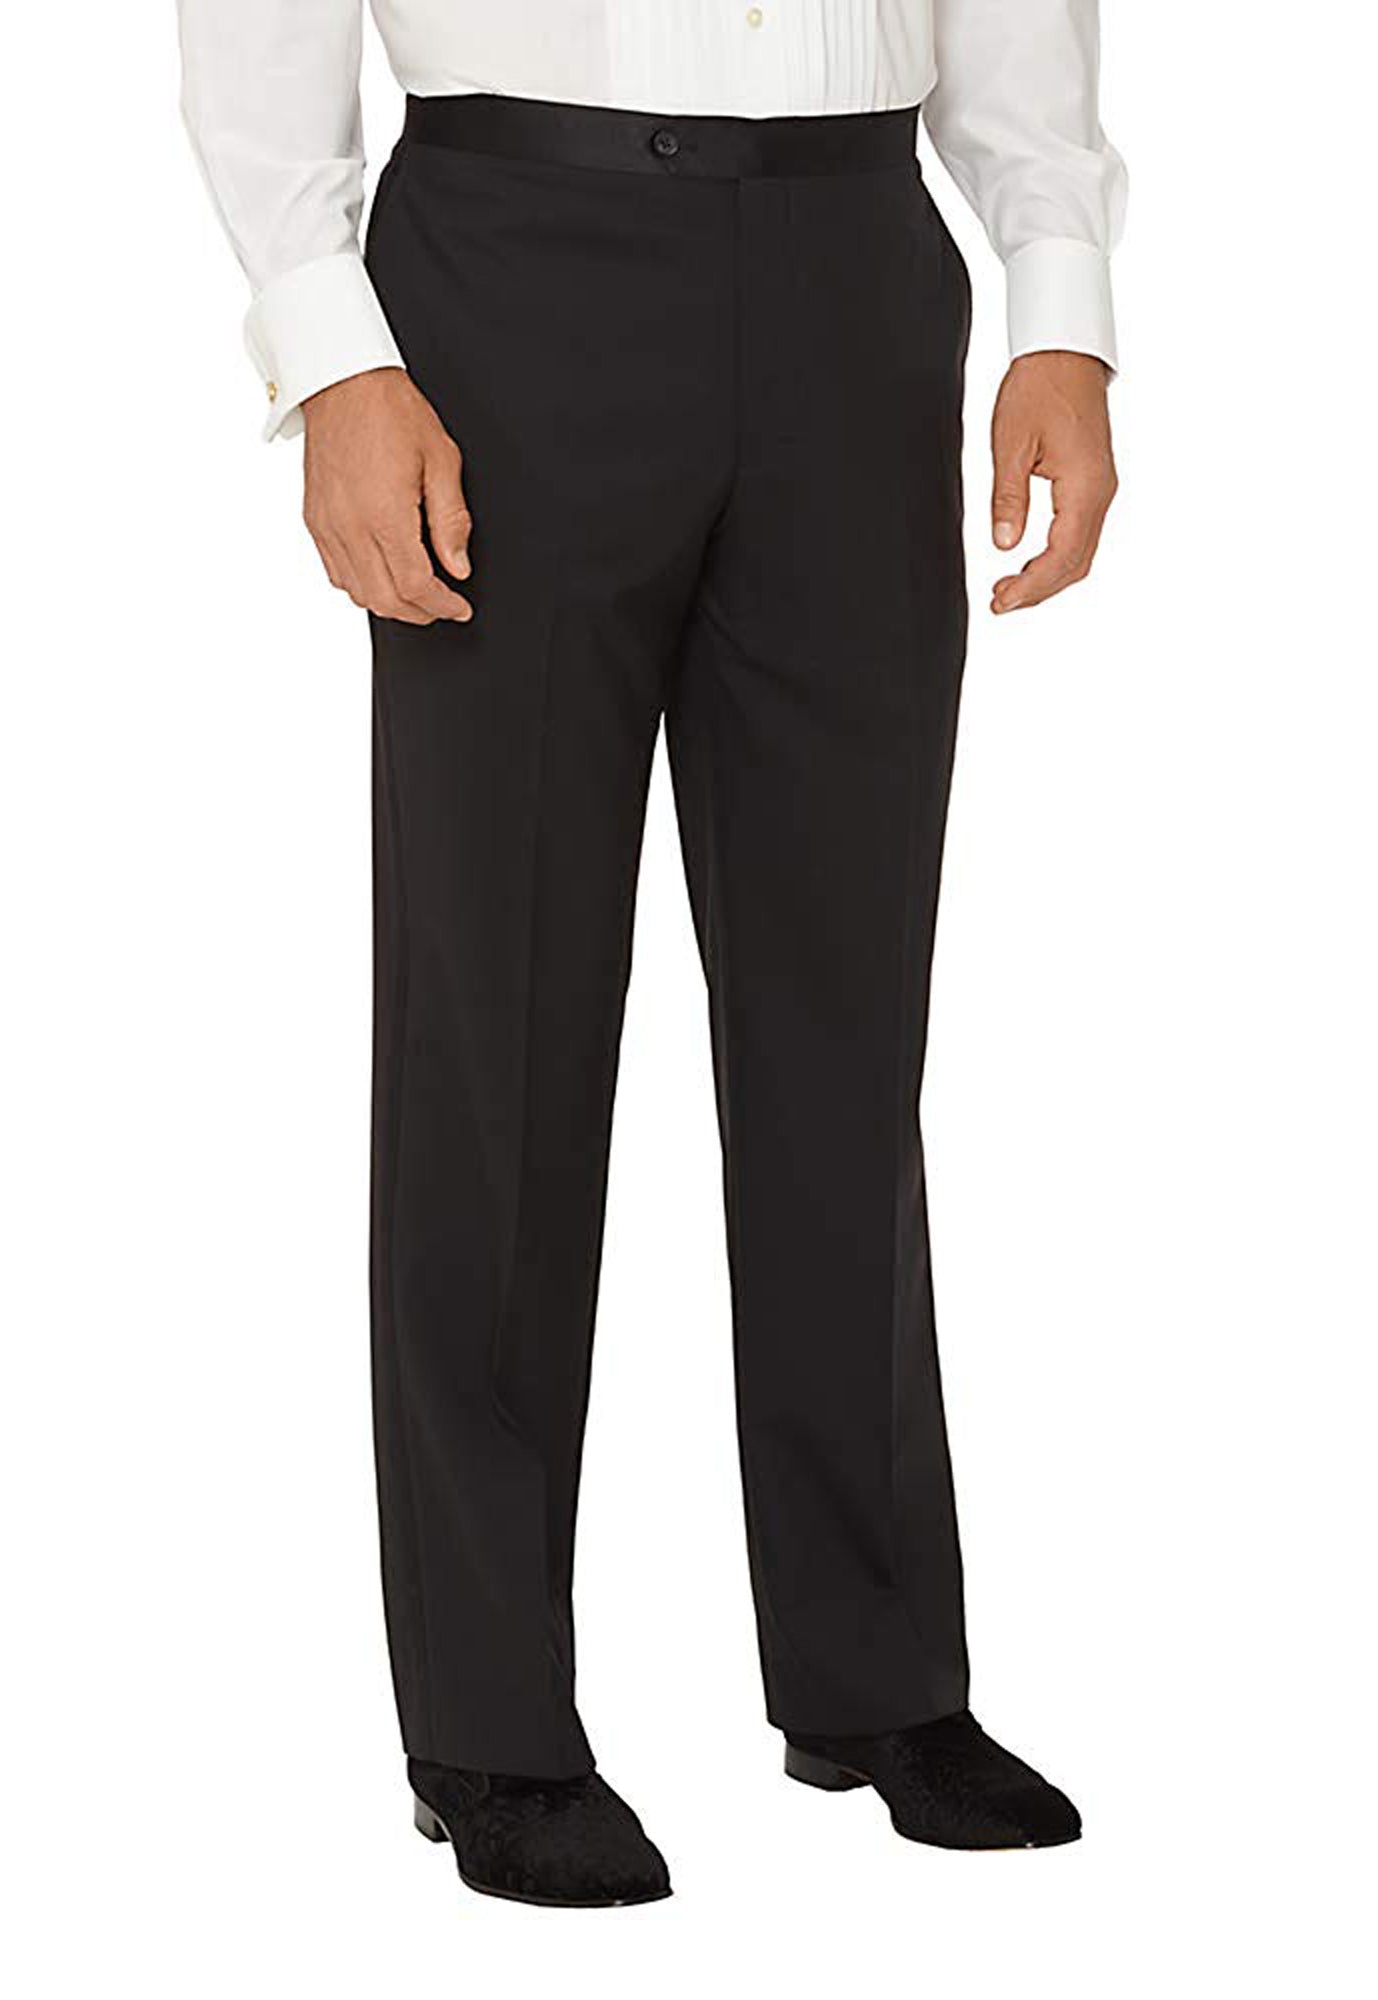 ASOS DESIGN super skinny tuxedo pants in black with animal side stripe   ASOS